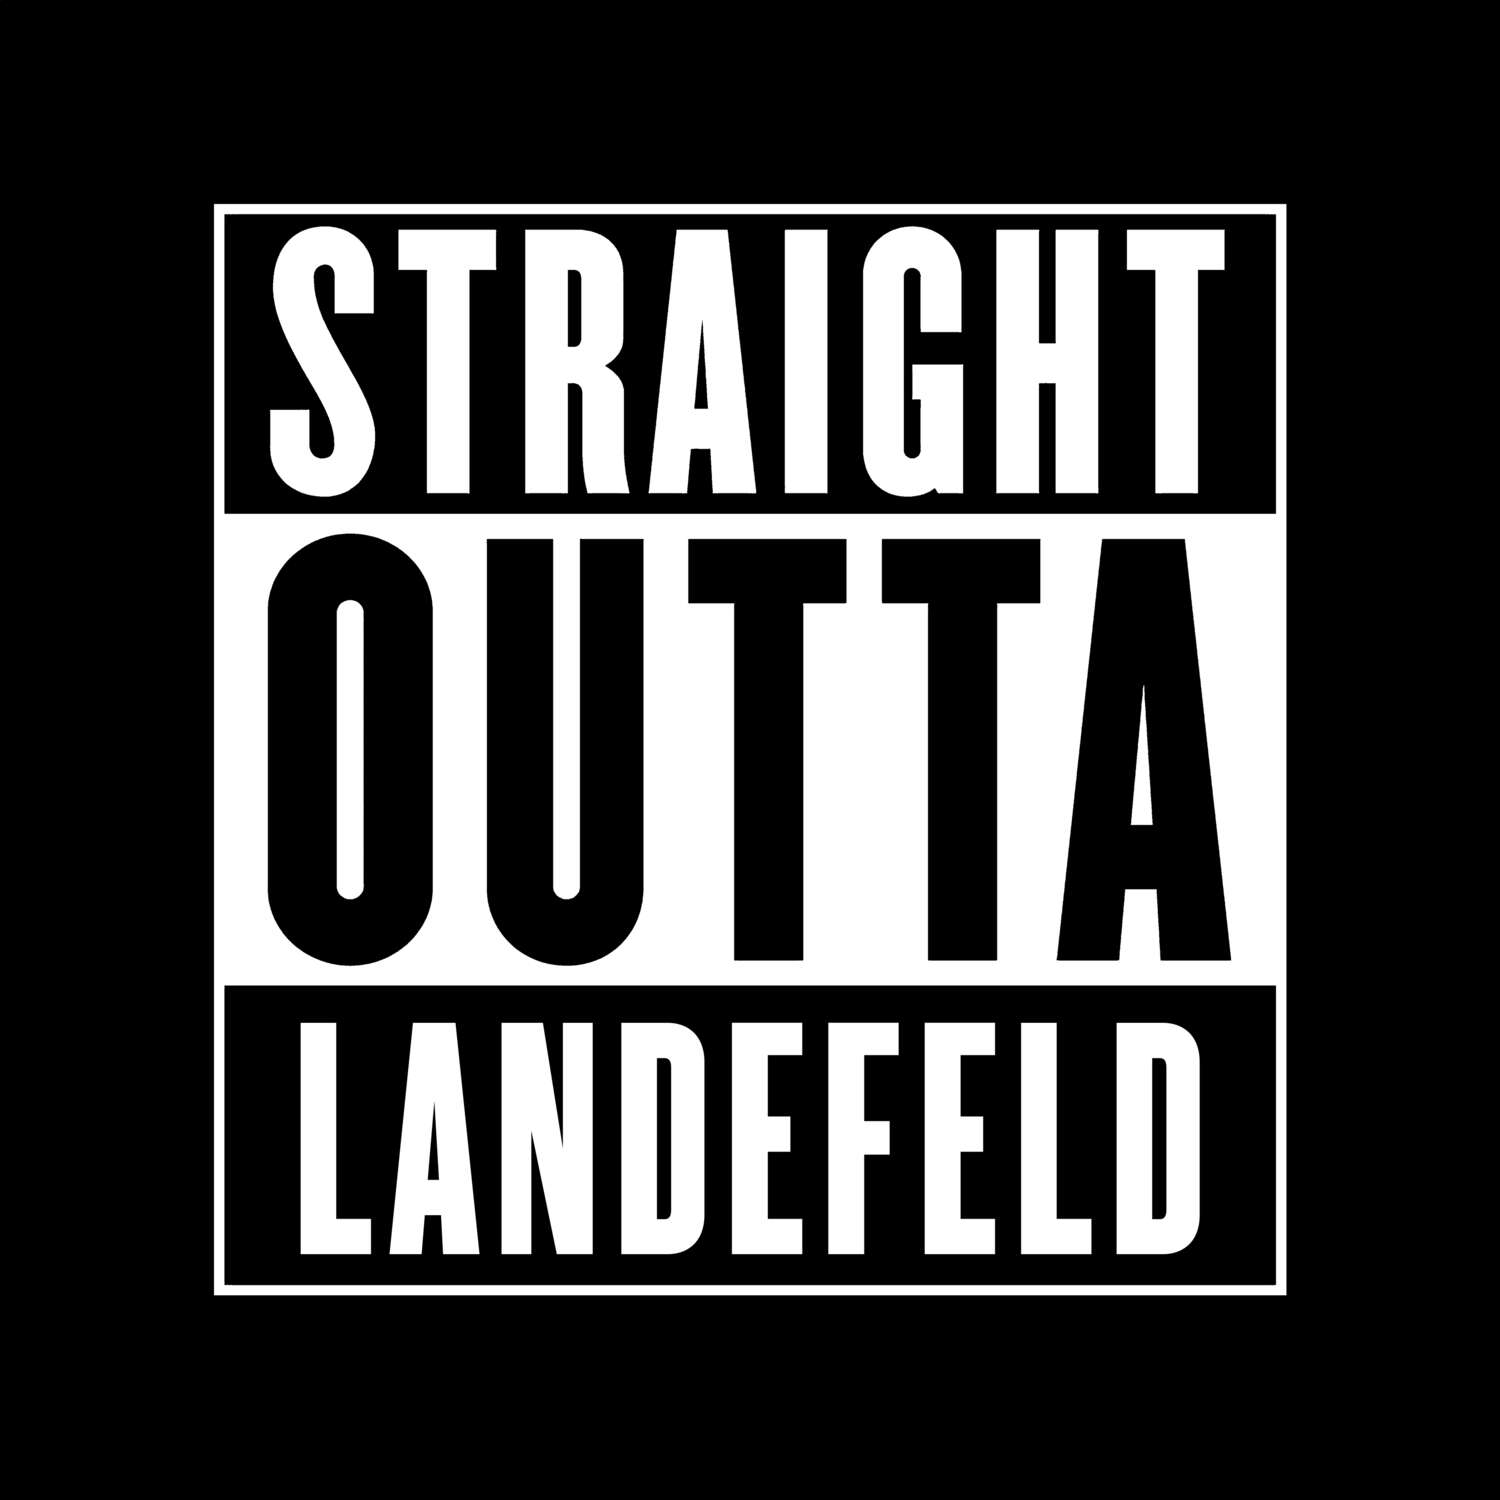 Landefeld T-Shirt »Straight Outta«